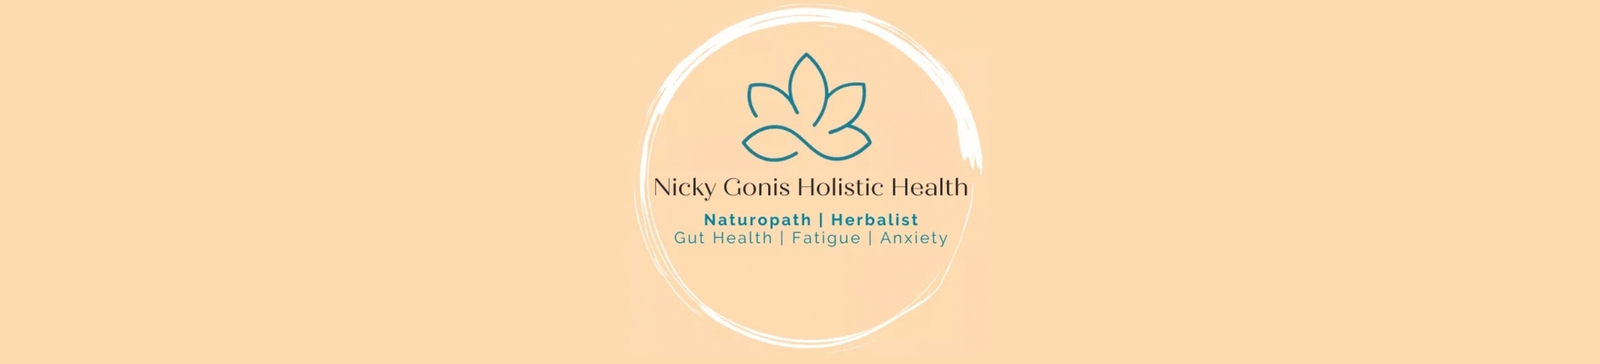 Nicky Gonis Holistic Health